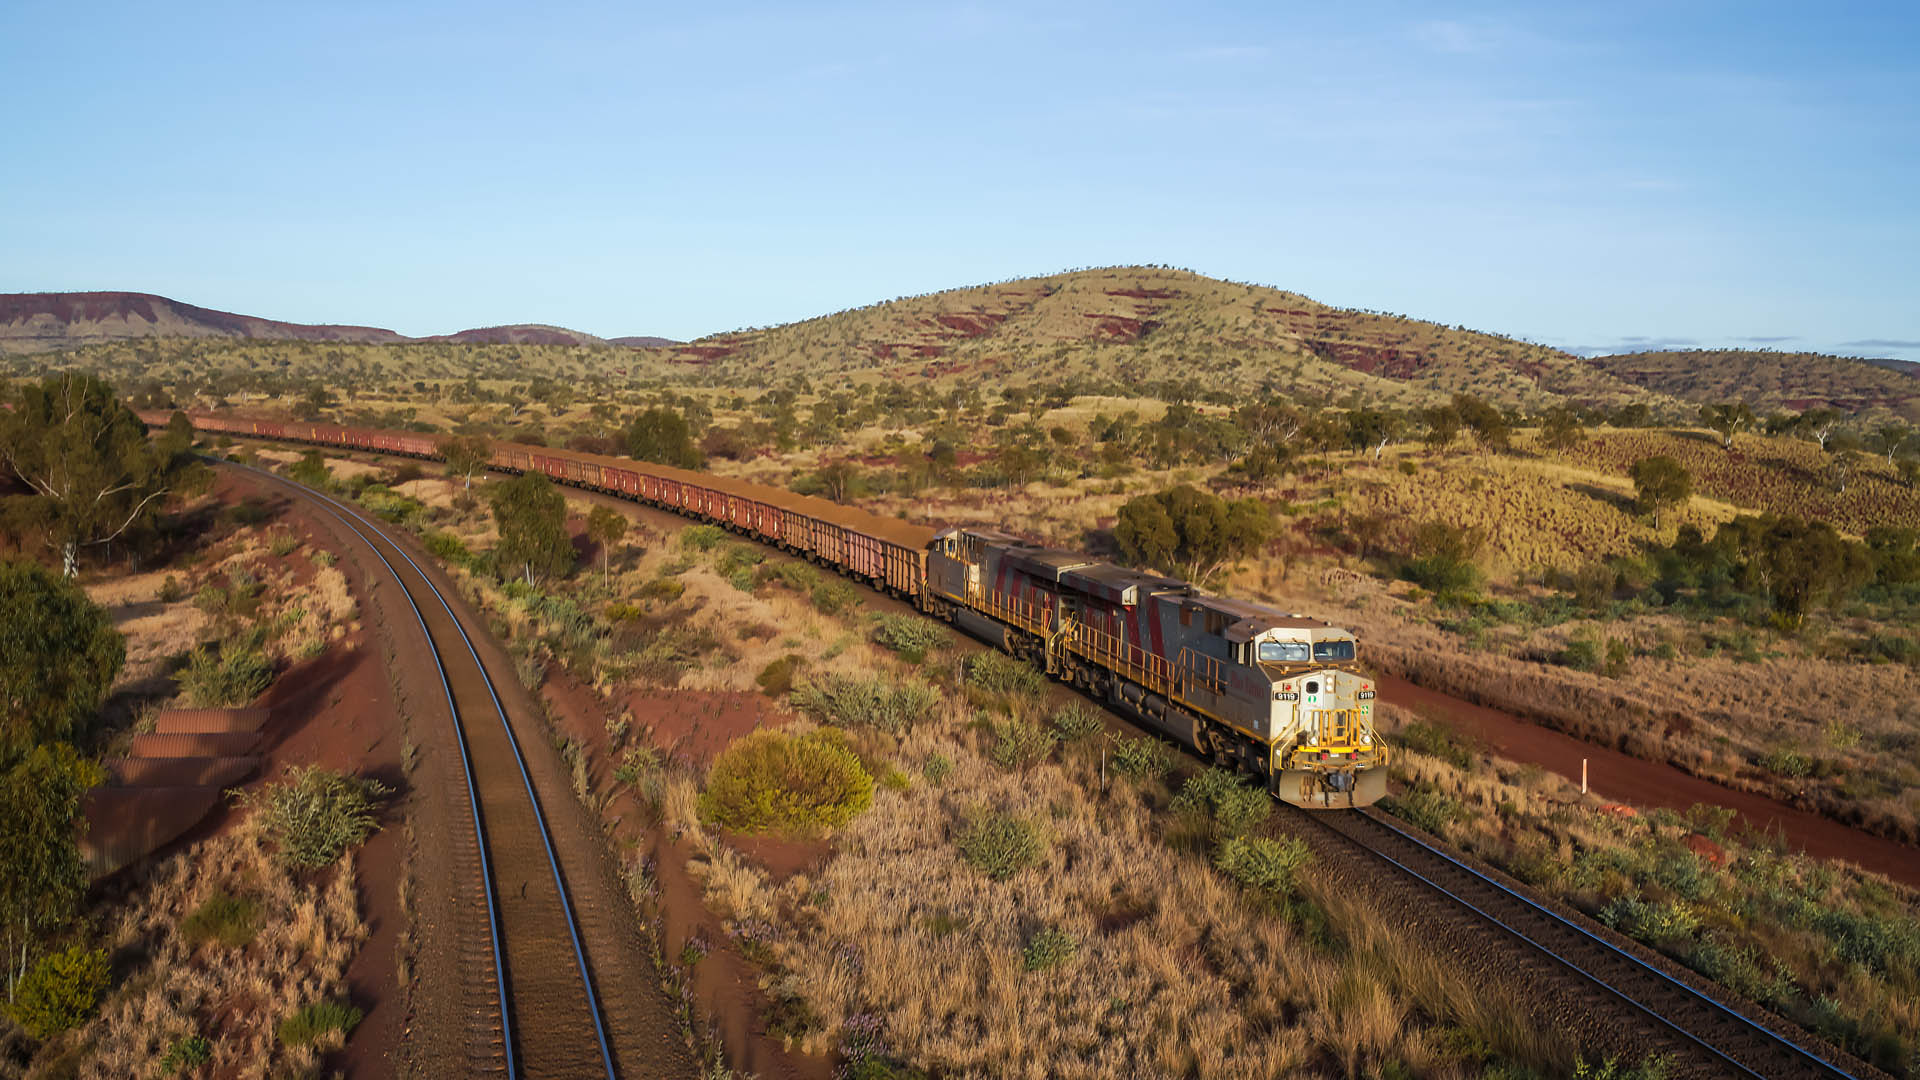 Pilbara AutoHaul train